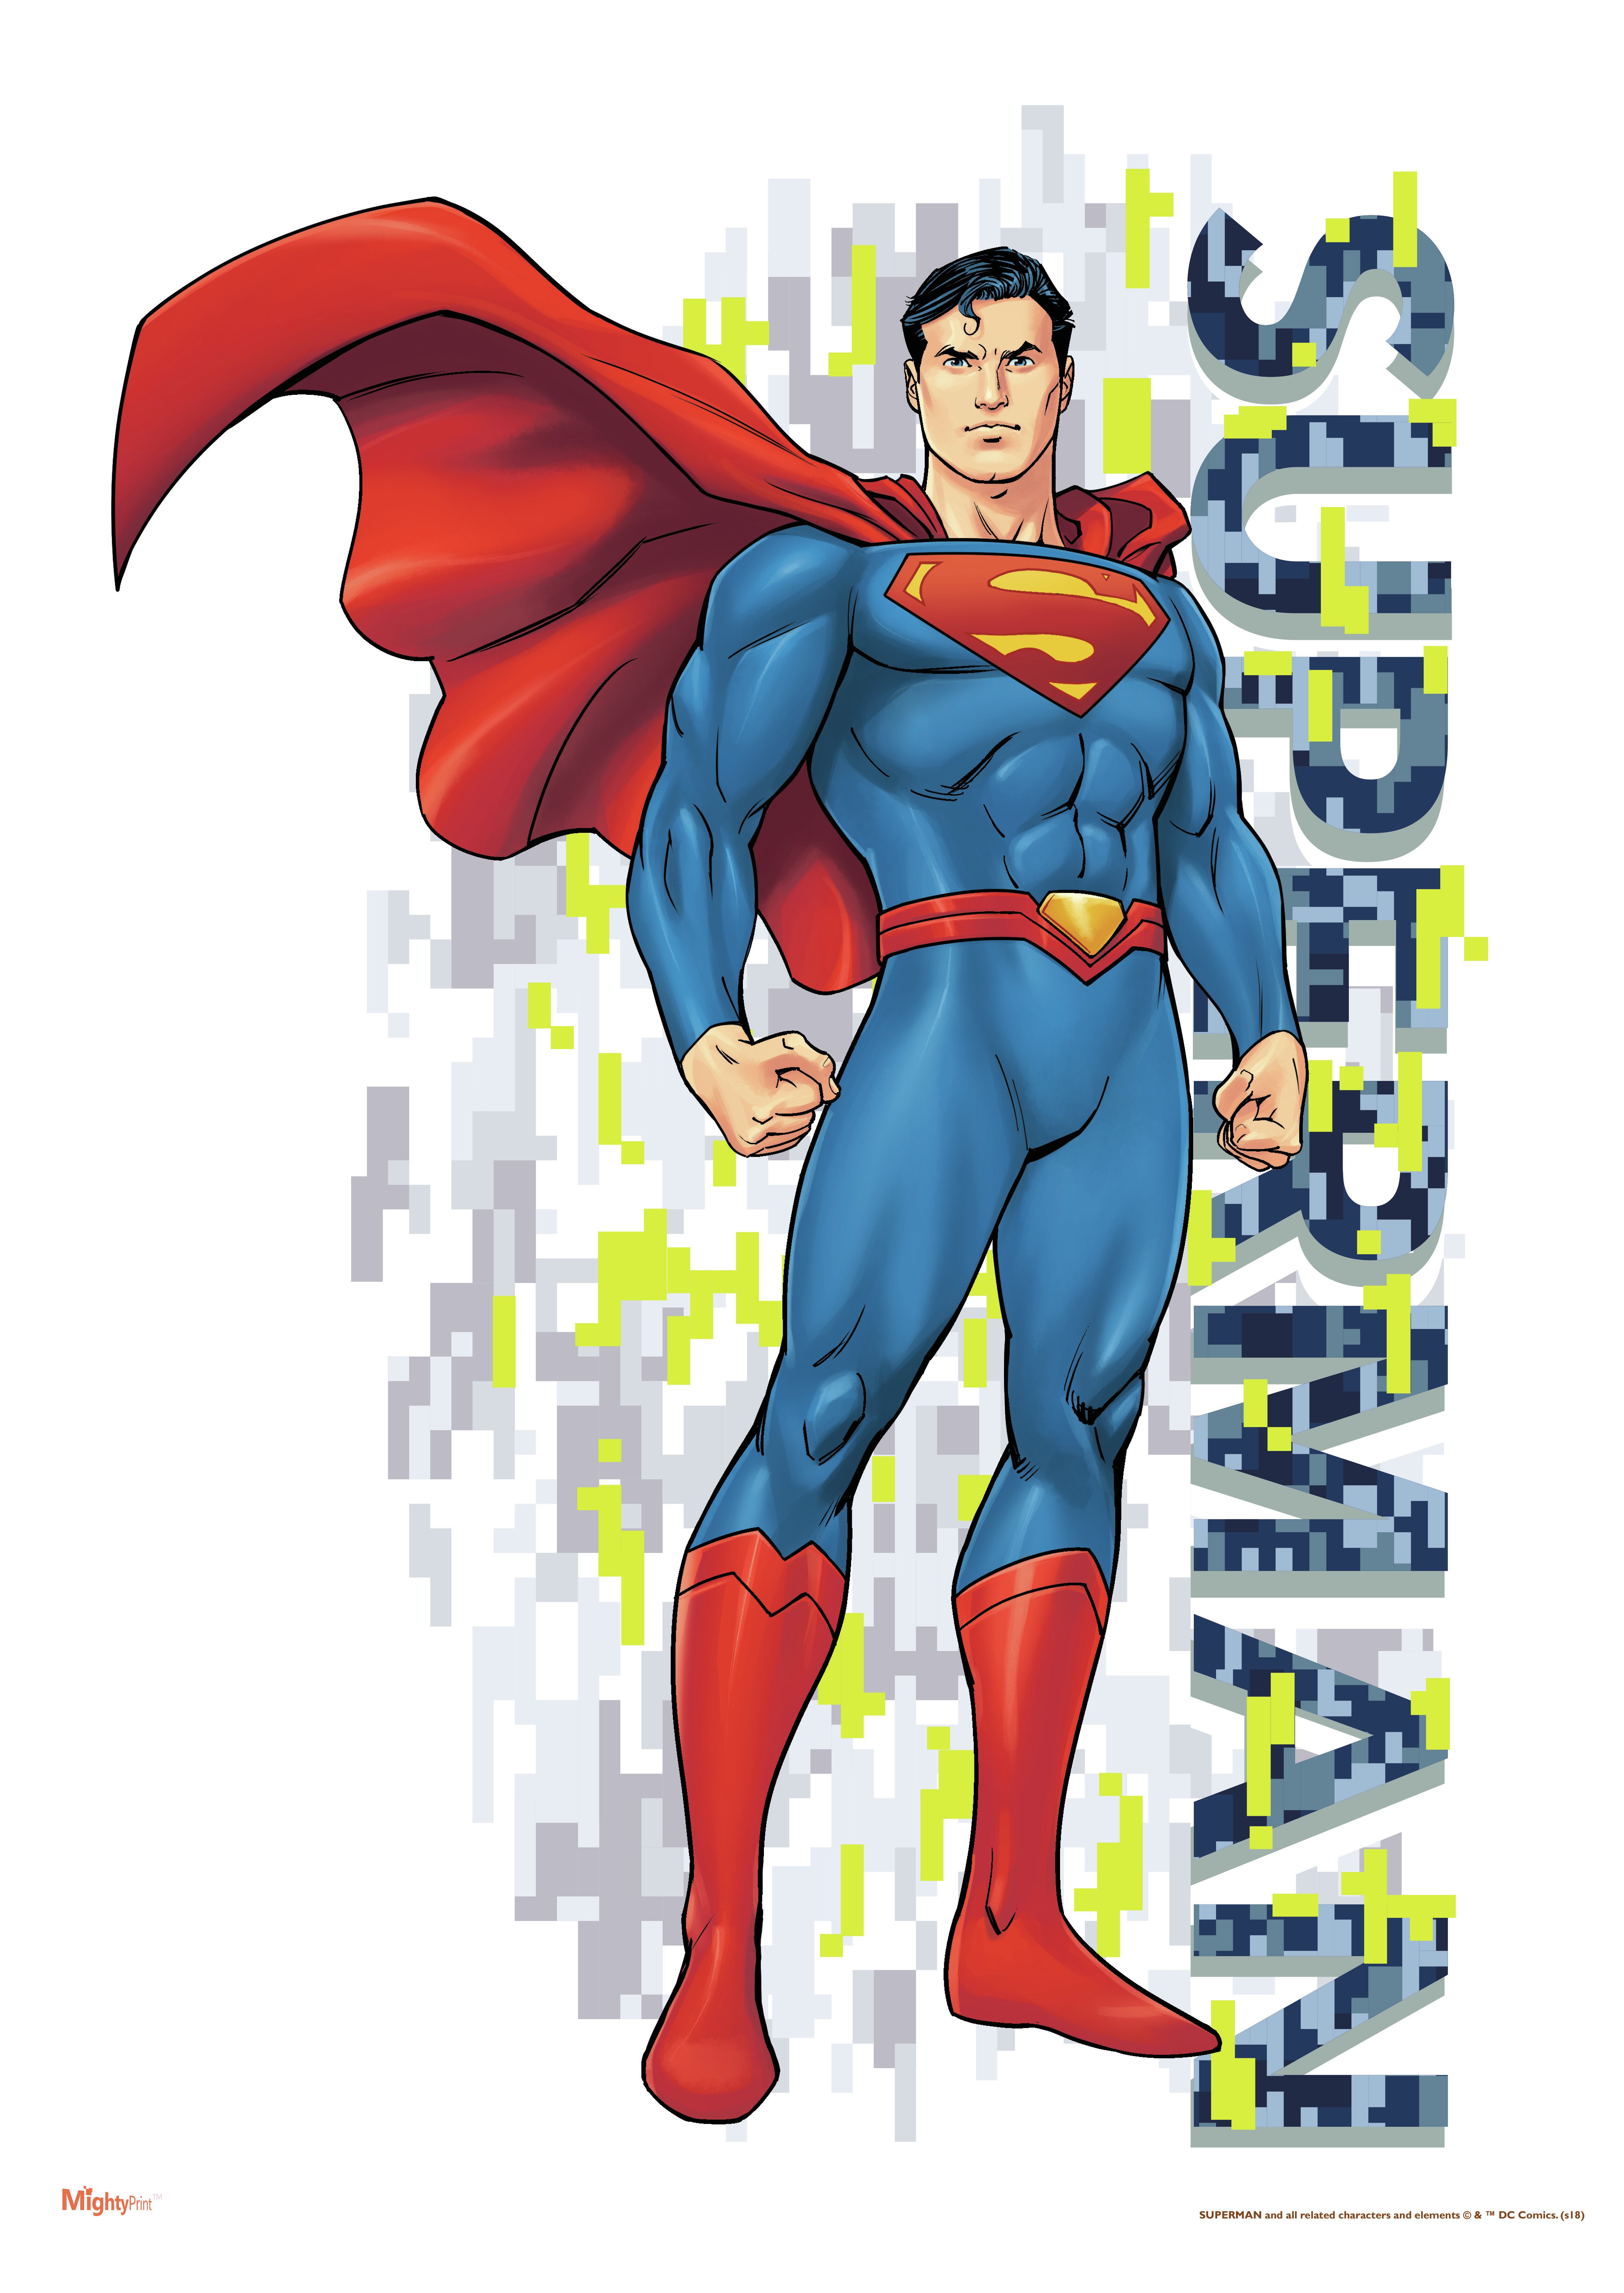 METAL Poster The Justice League Superman Batman Art Print Plaque Gift